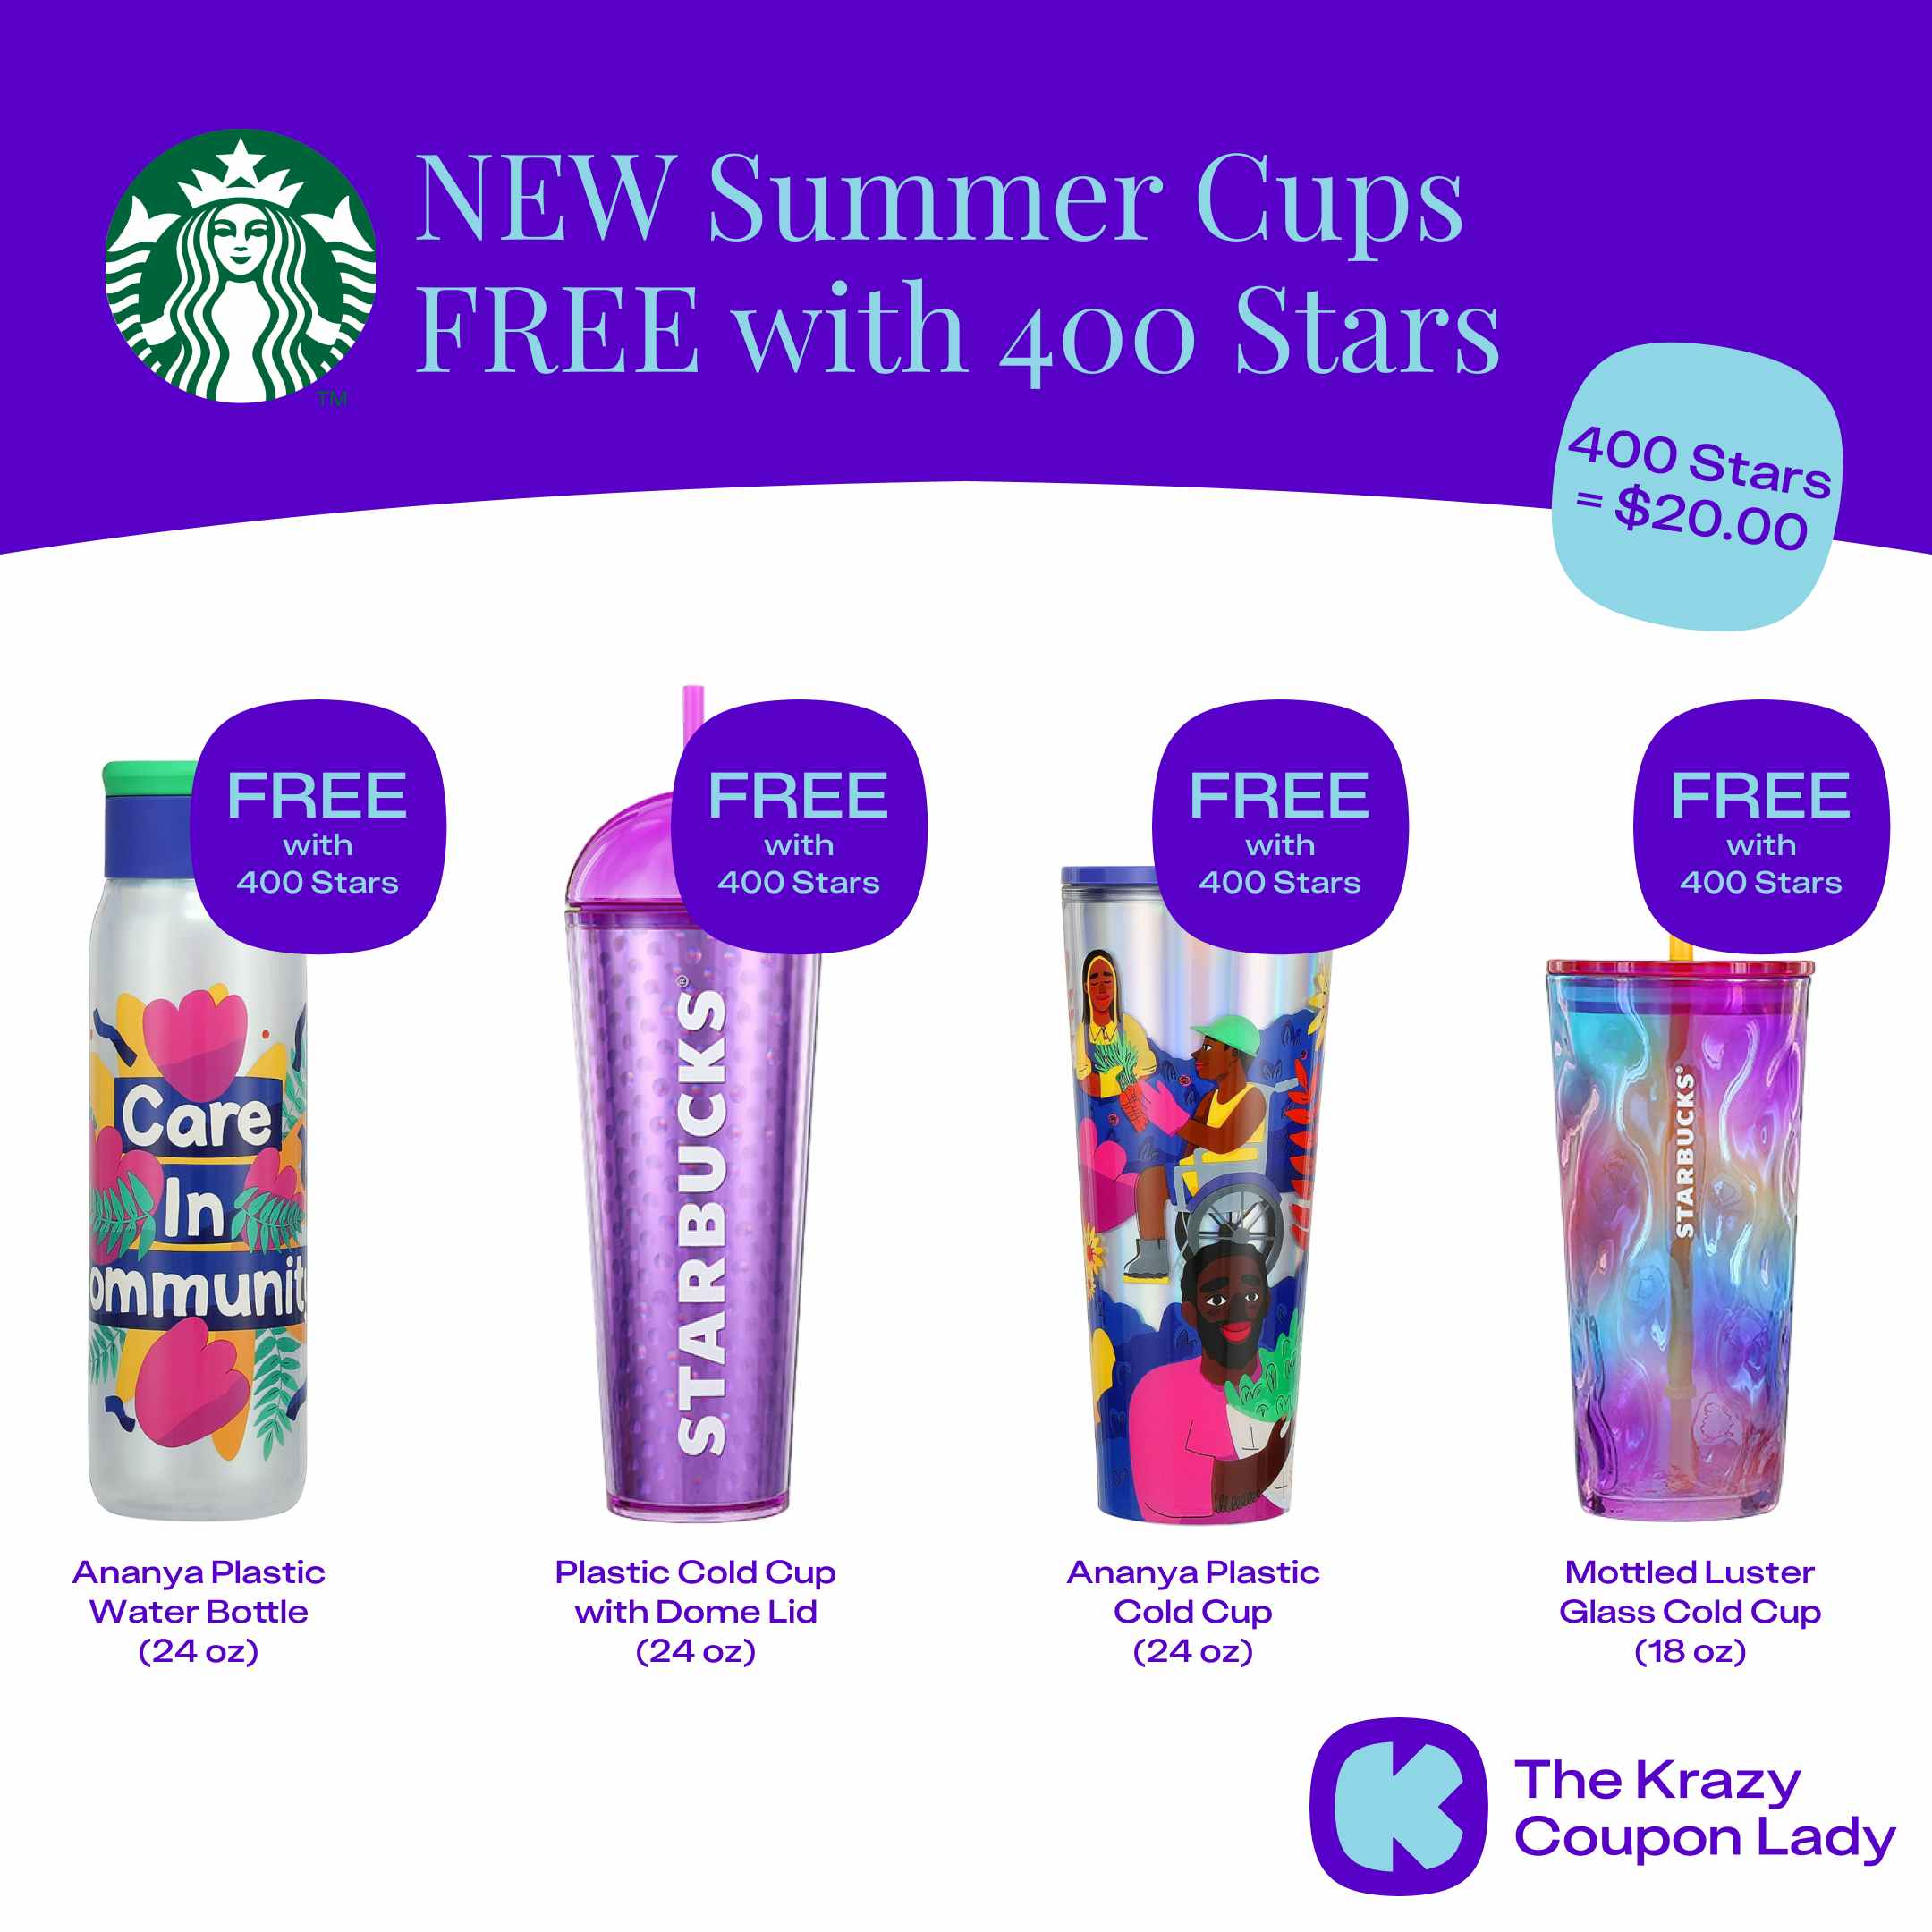 Starbucks Summer Cups